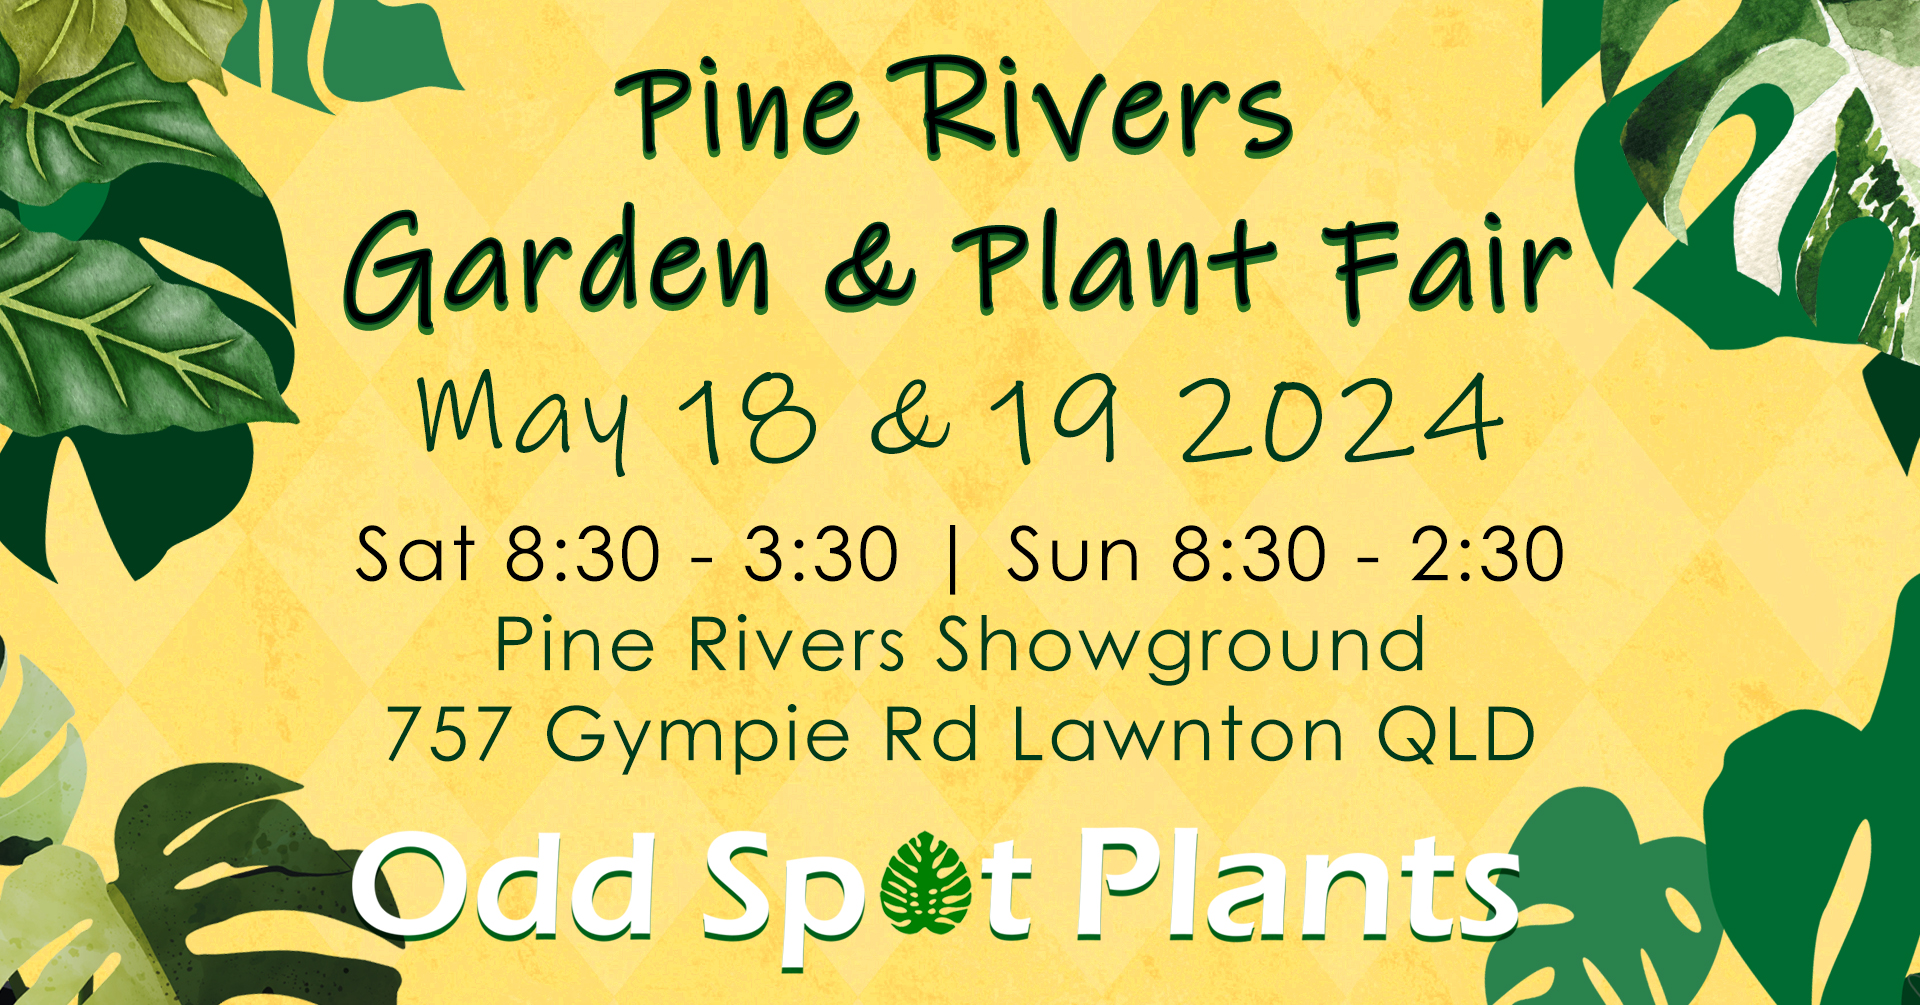 Pine Rivers Garden & Plant Fair - May 18th & 19th 2024